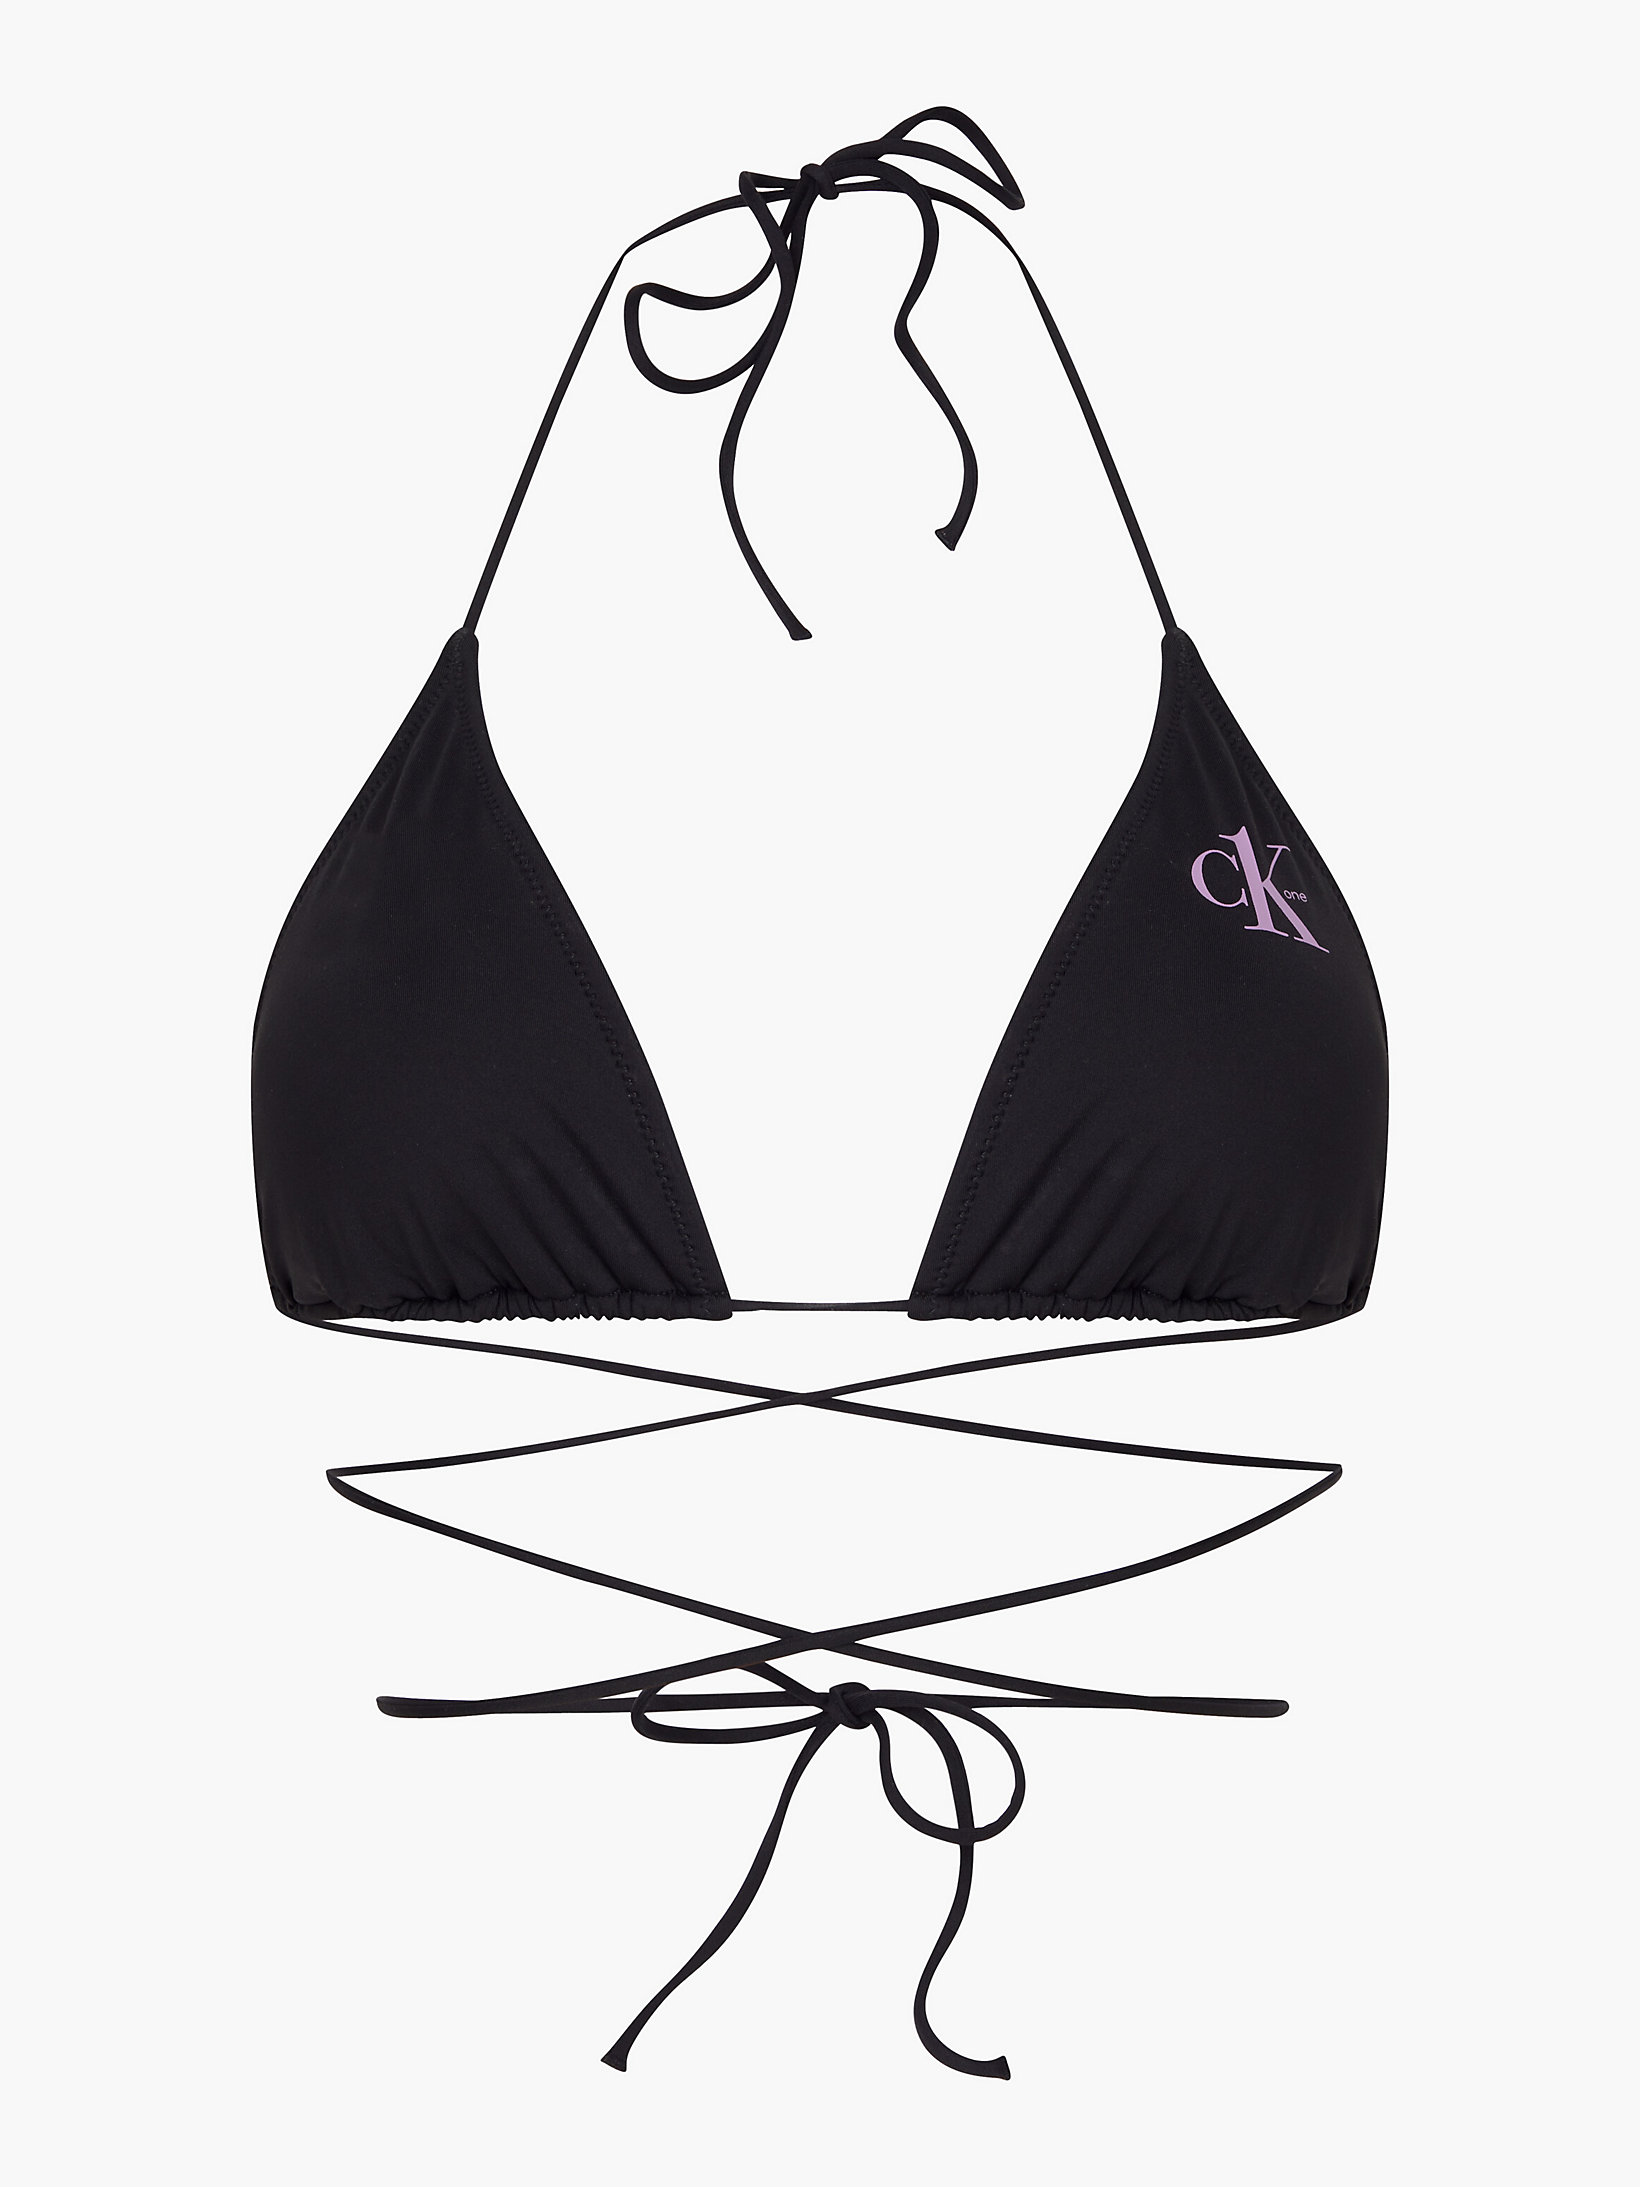 Pvh Black Triangle Bikini Top - CK One undefined women Calvin Klein